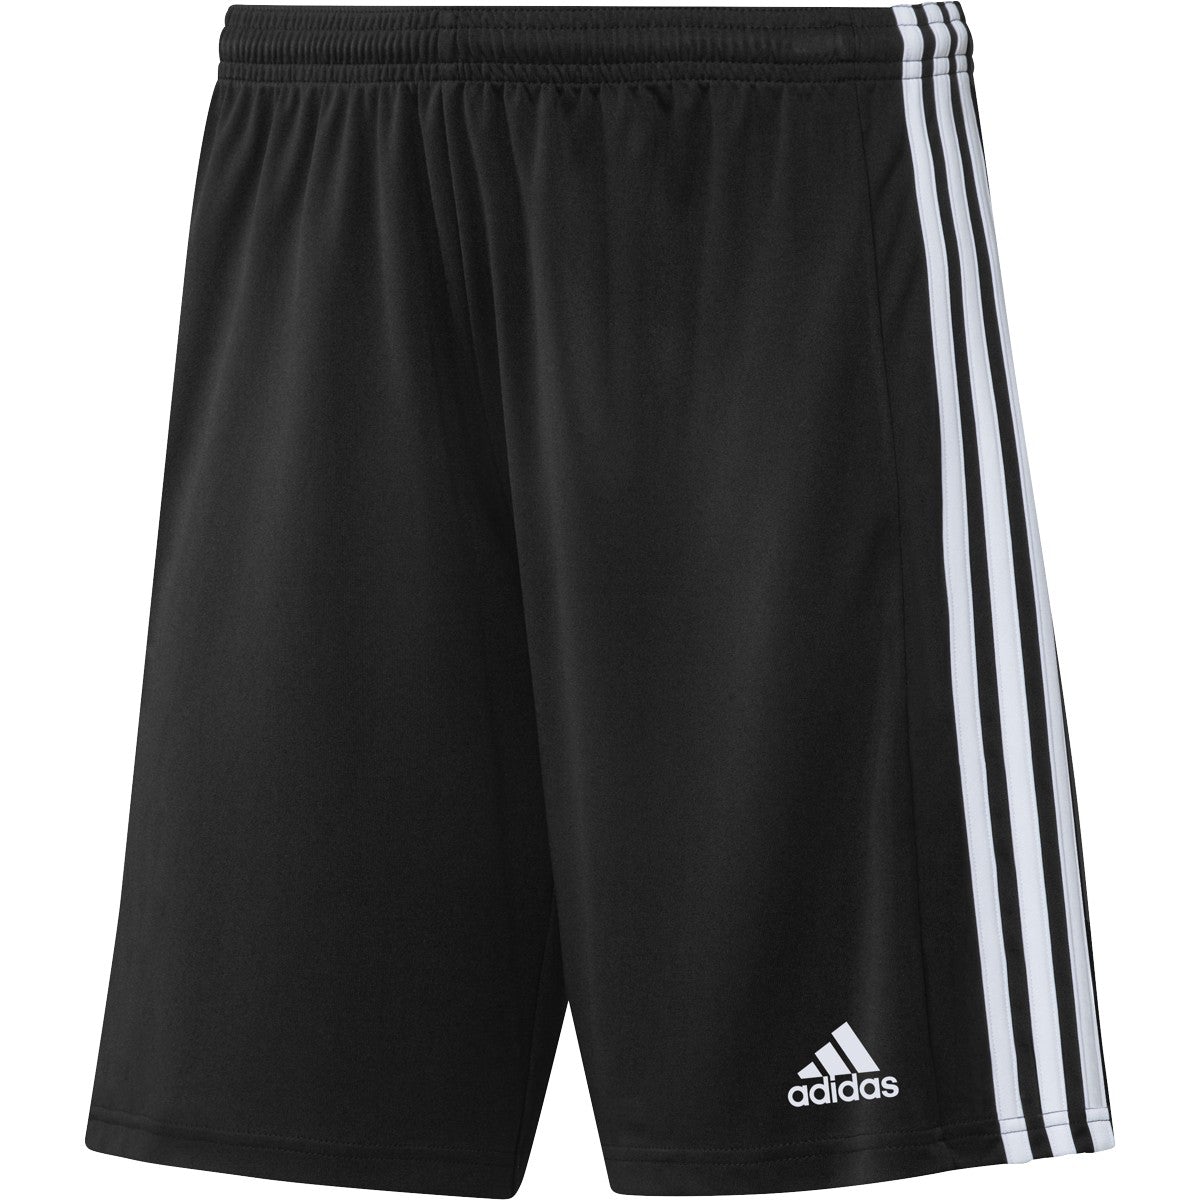 adidas Men's Squadra 21 Short | GN5776 Shorts Adidas adult Small Black/White 